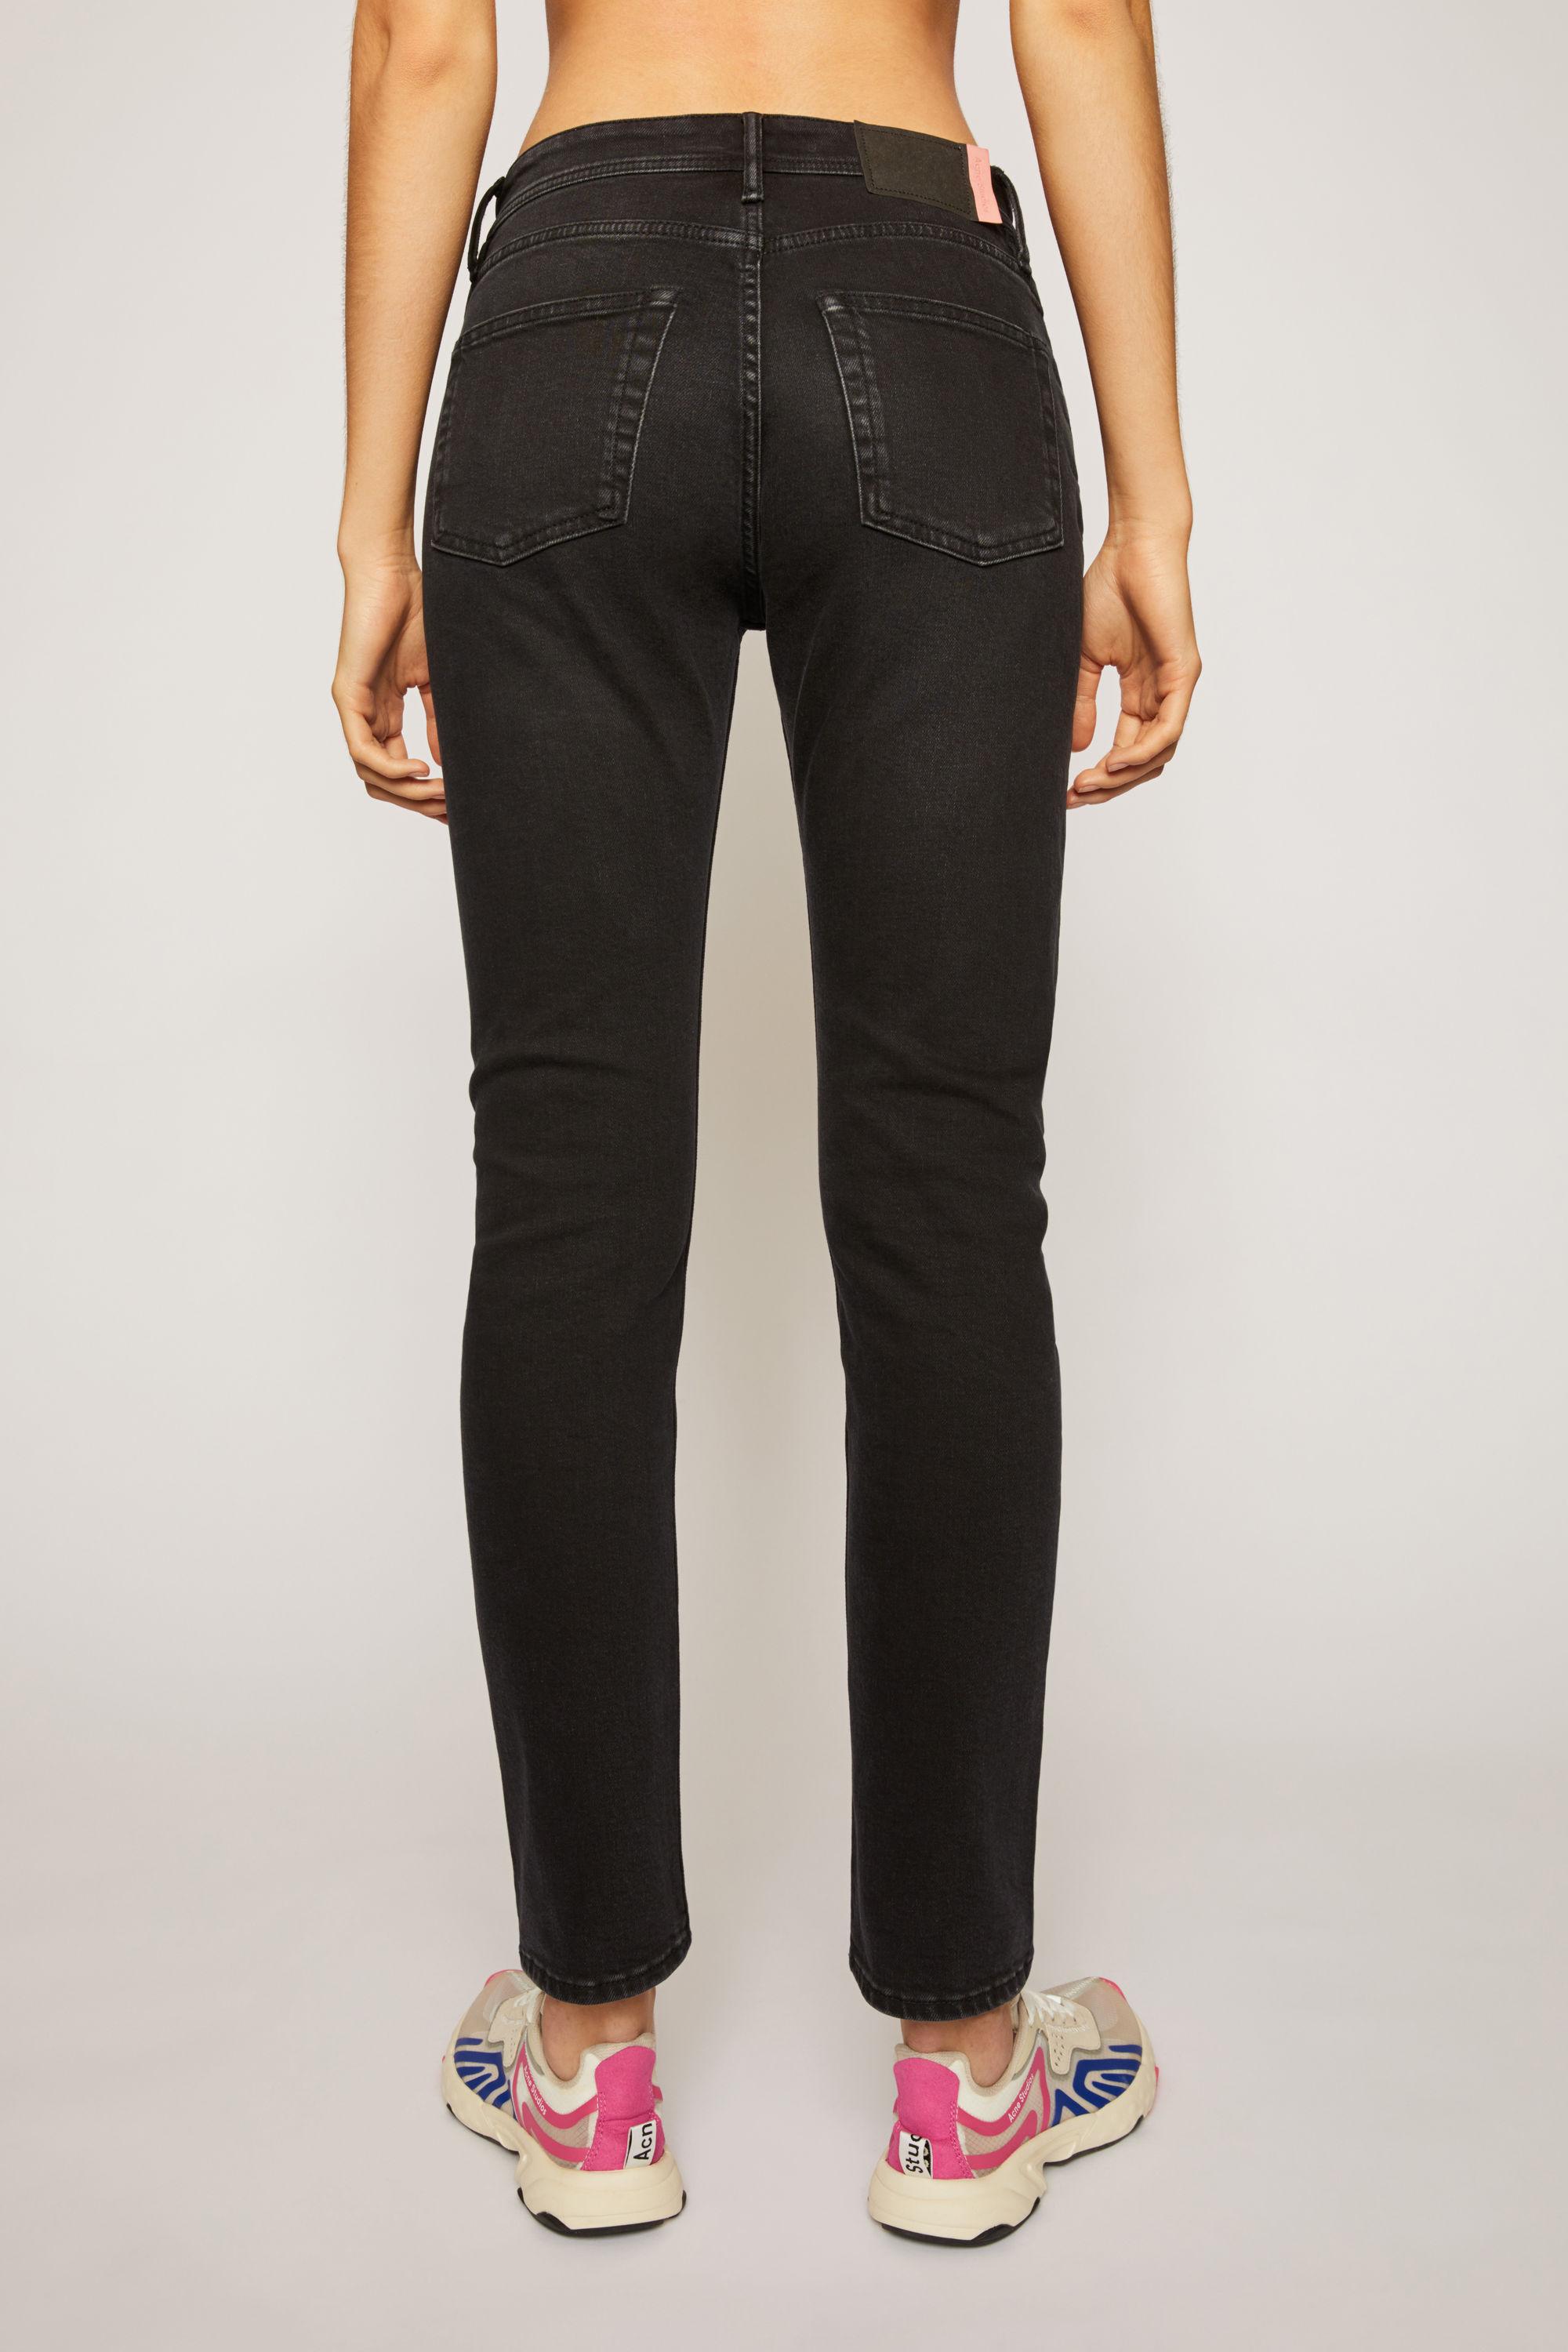 Acne Studios Denim Melk Used Blk1 Used Black Slim Tapered Fit Jeans - Lyst